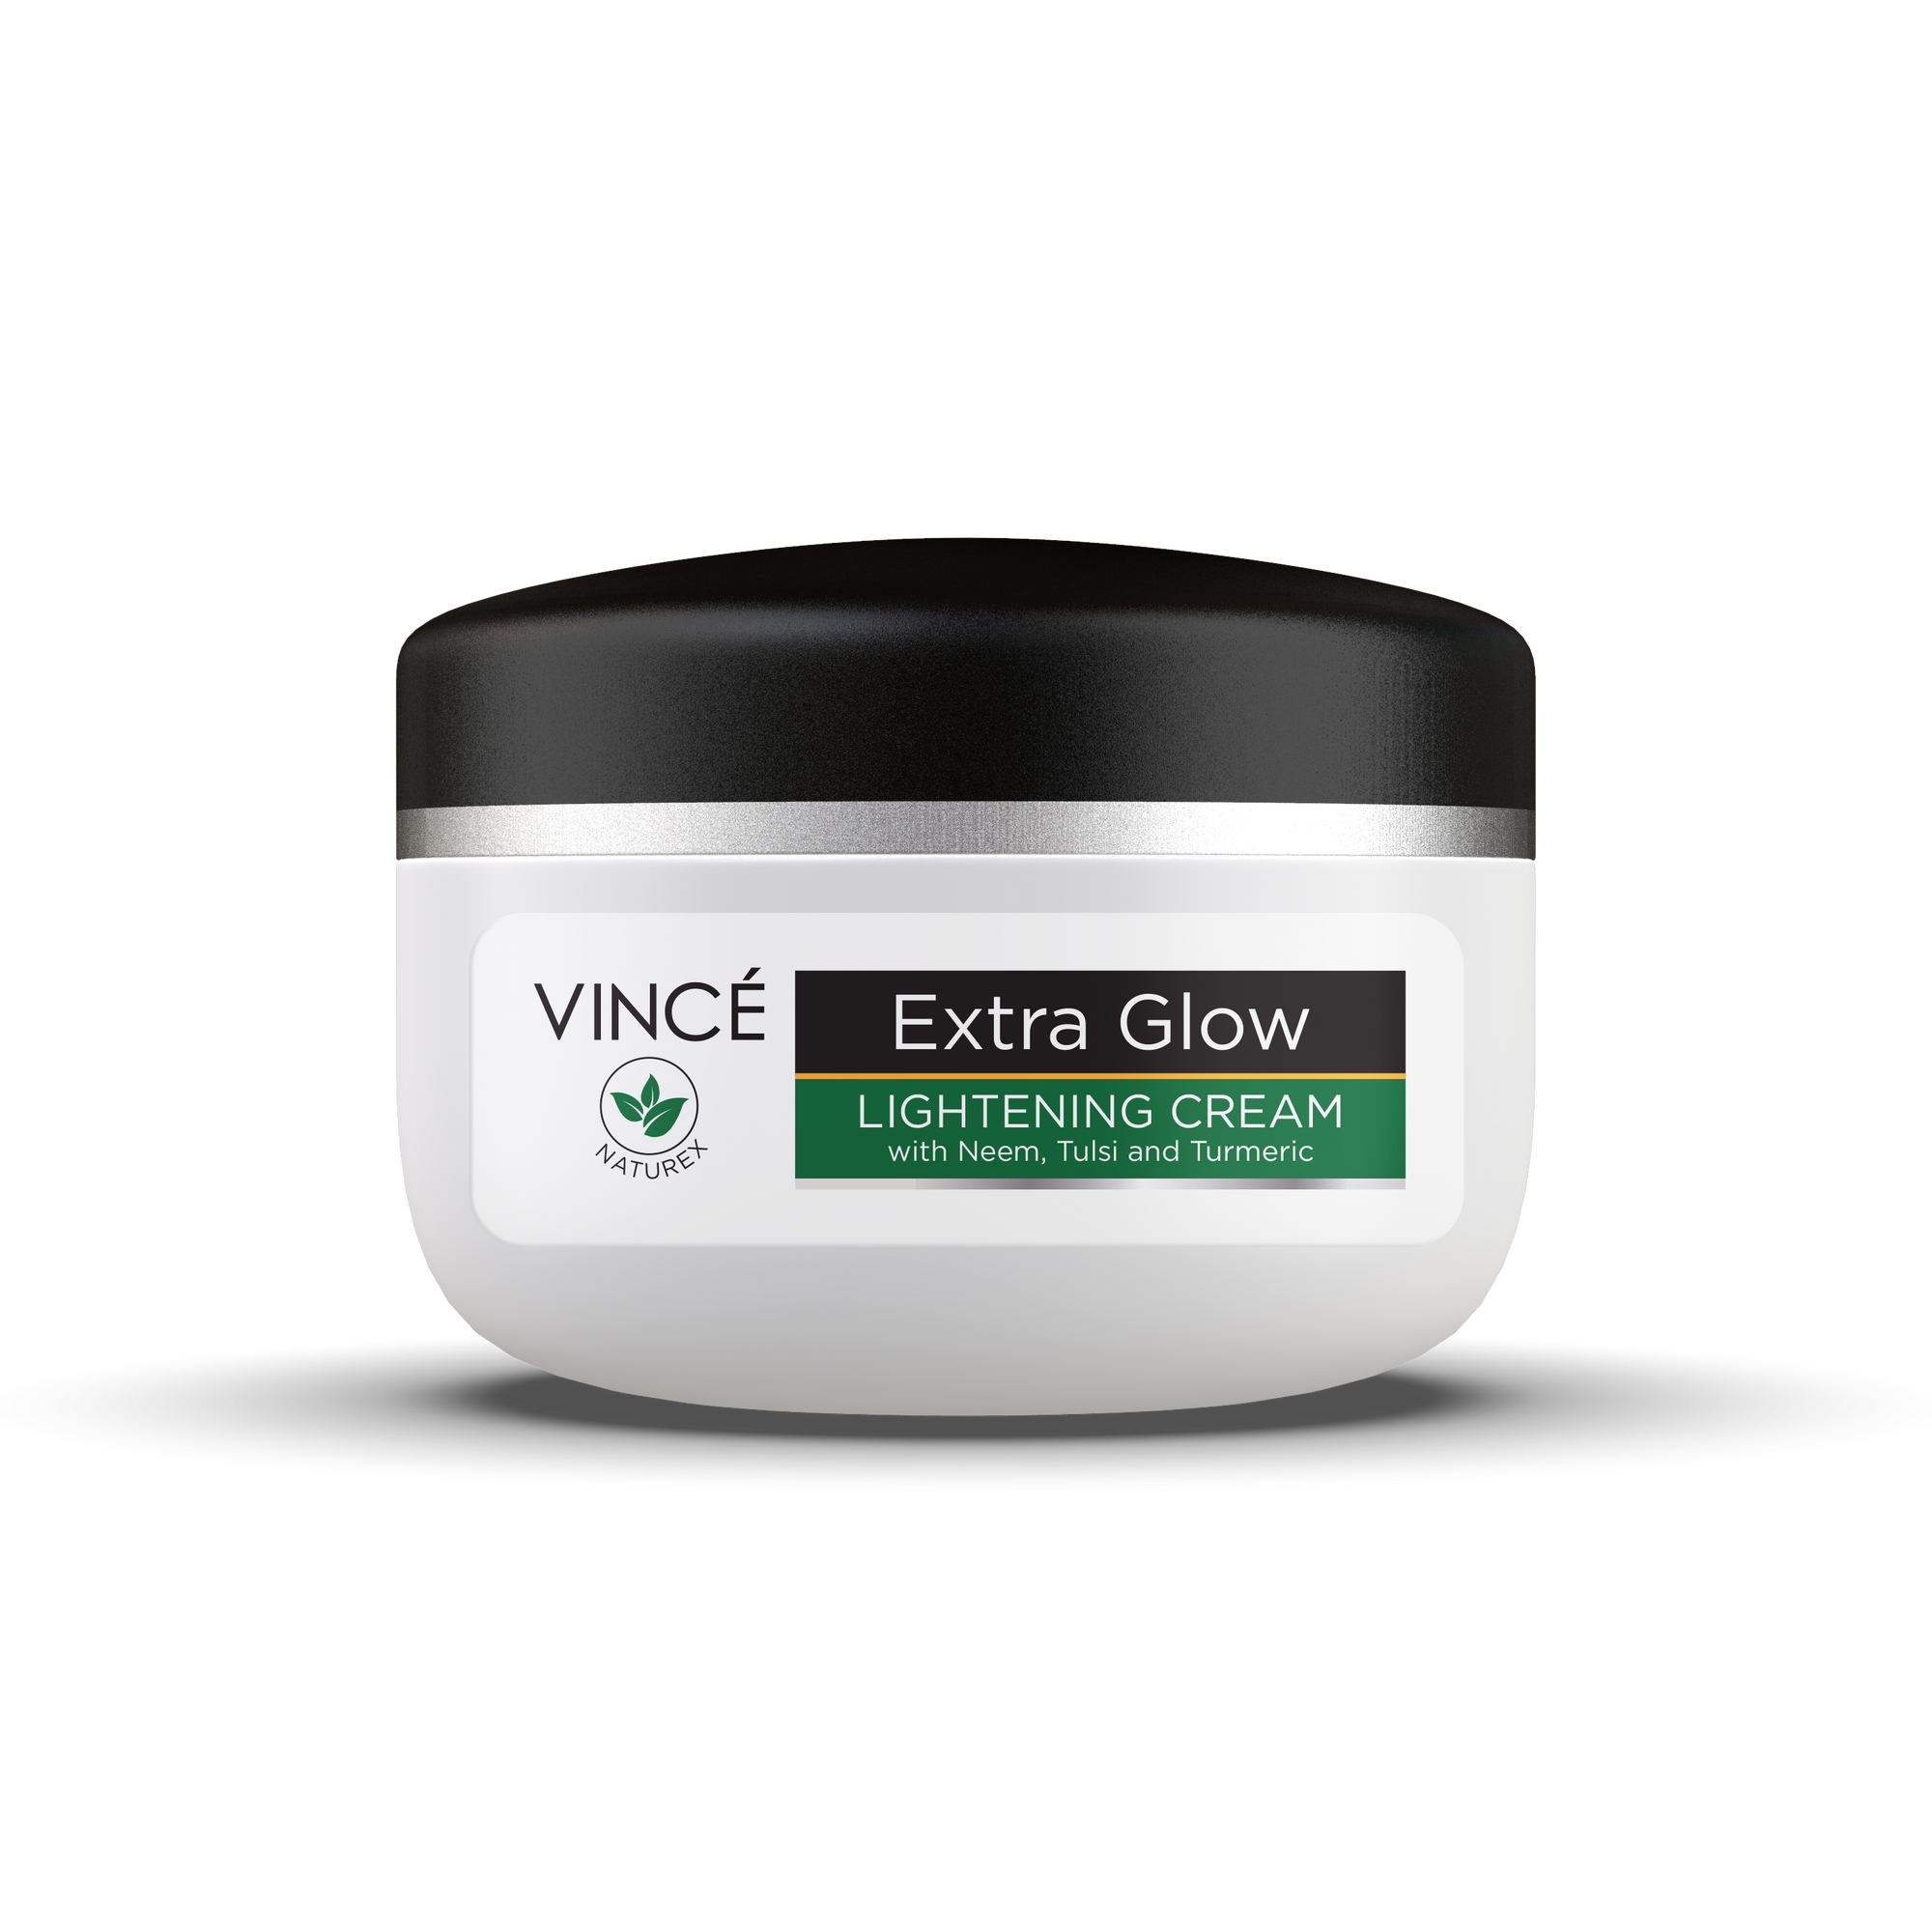 Buy Vince Extra Glow Lightening Cream with Neem, Tulsi and Turmeric Online in Pakistan | GlowBeauty.pk